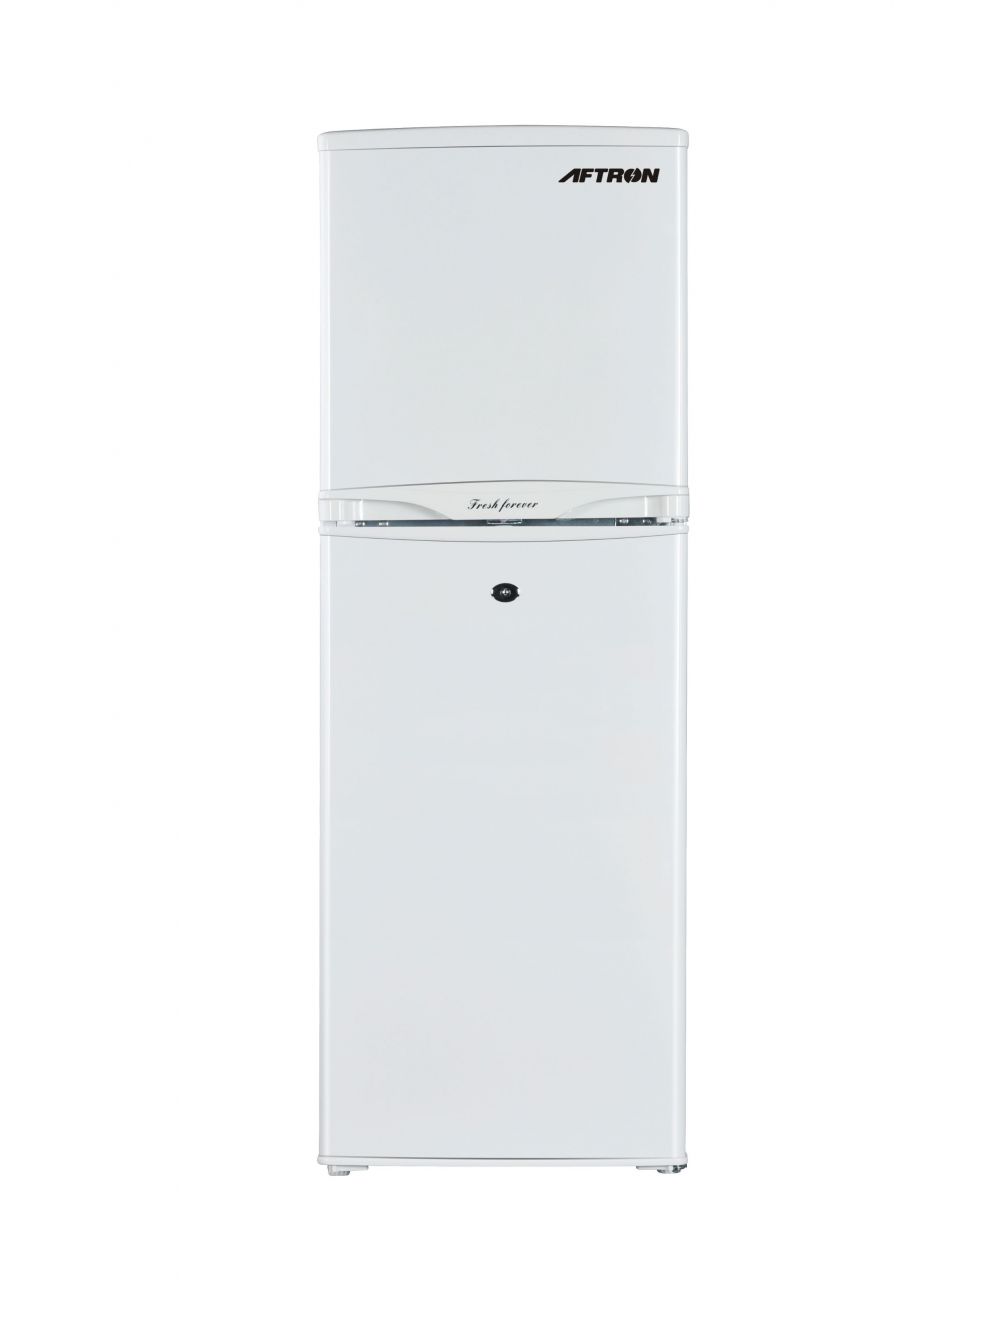 Aftron  Fridge Freezer (200L, White)-AFR745H